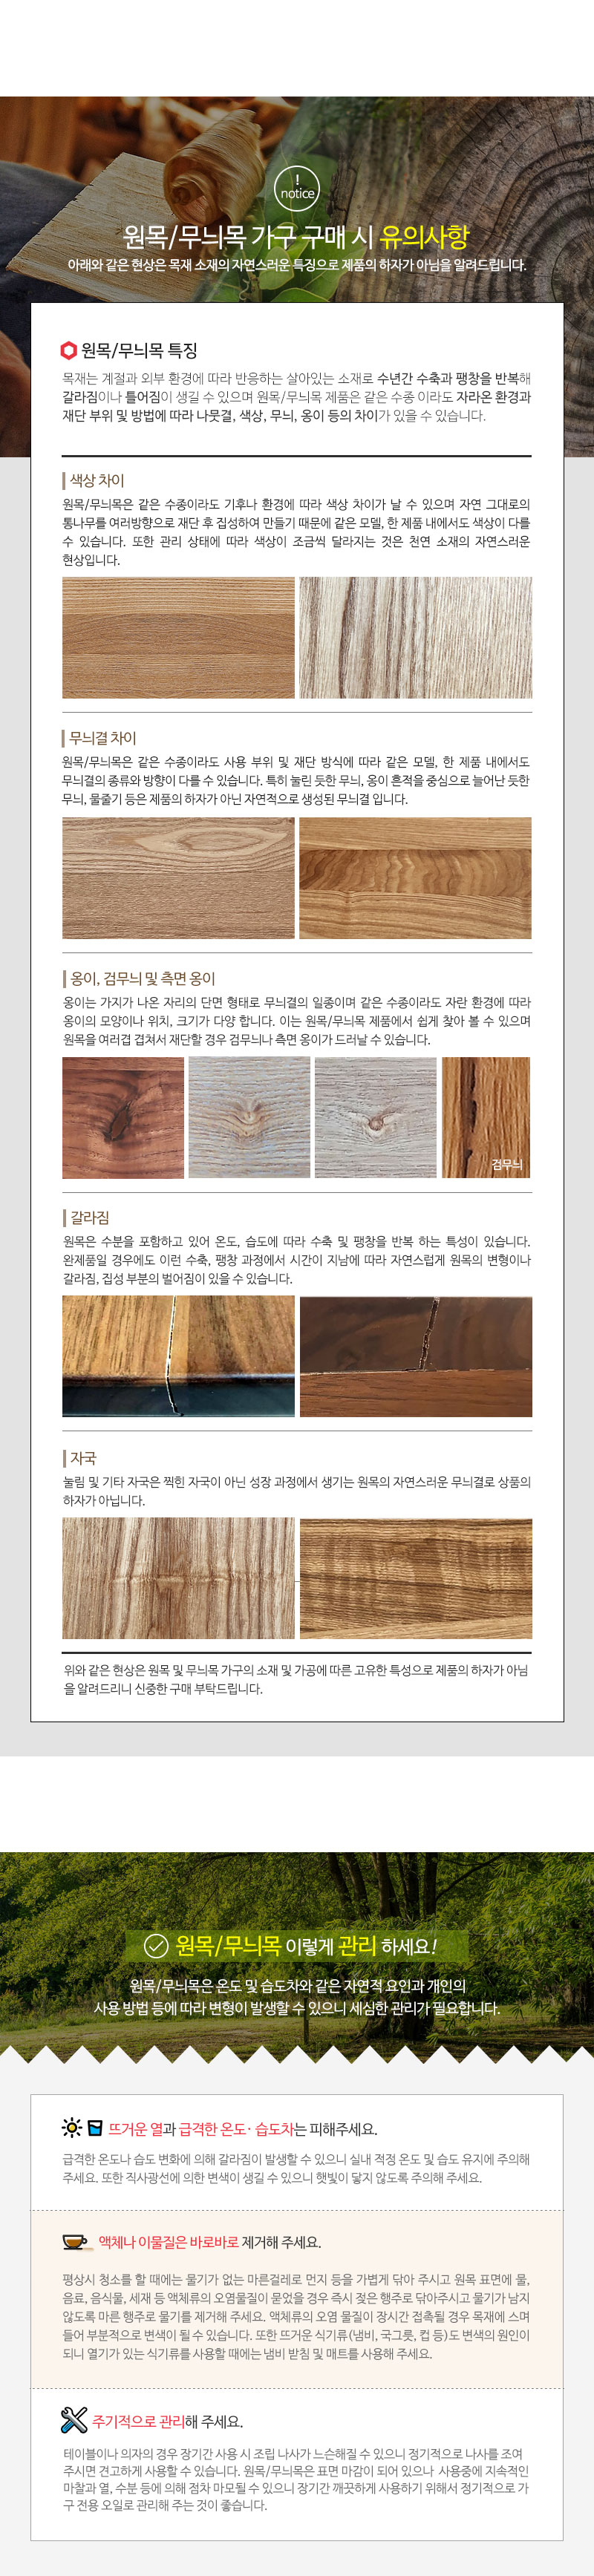 wood_caution_tip.jpg